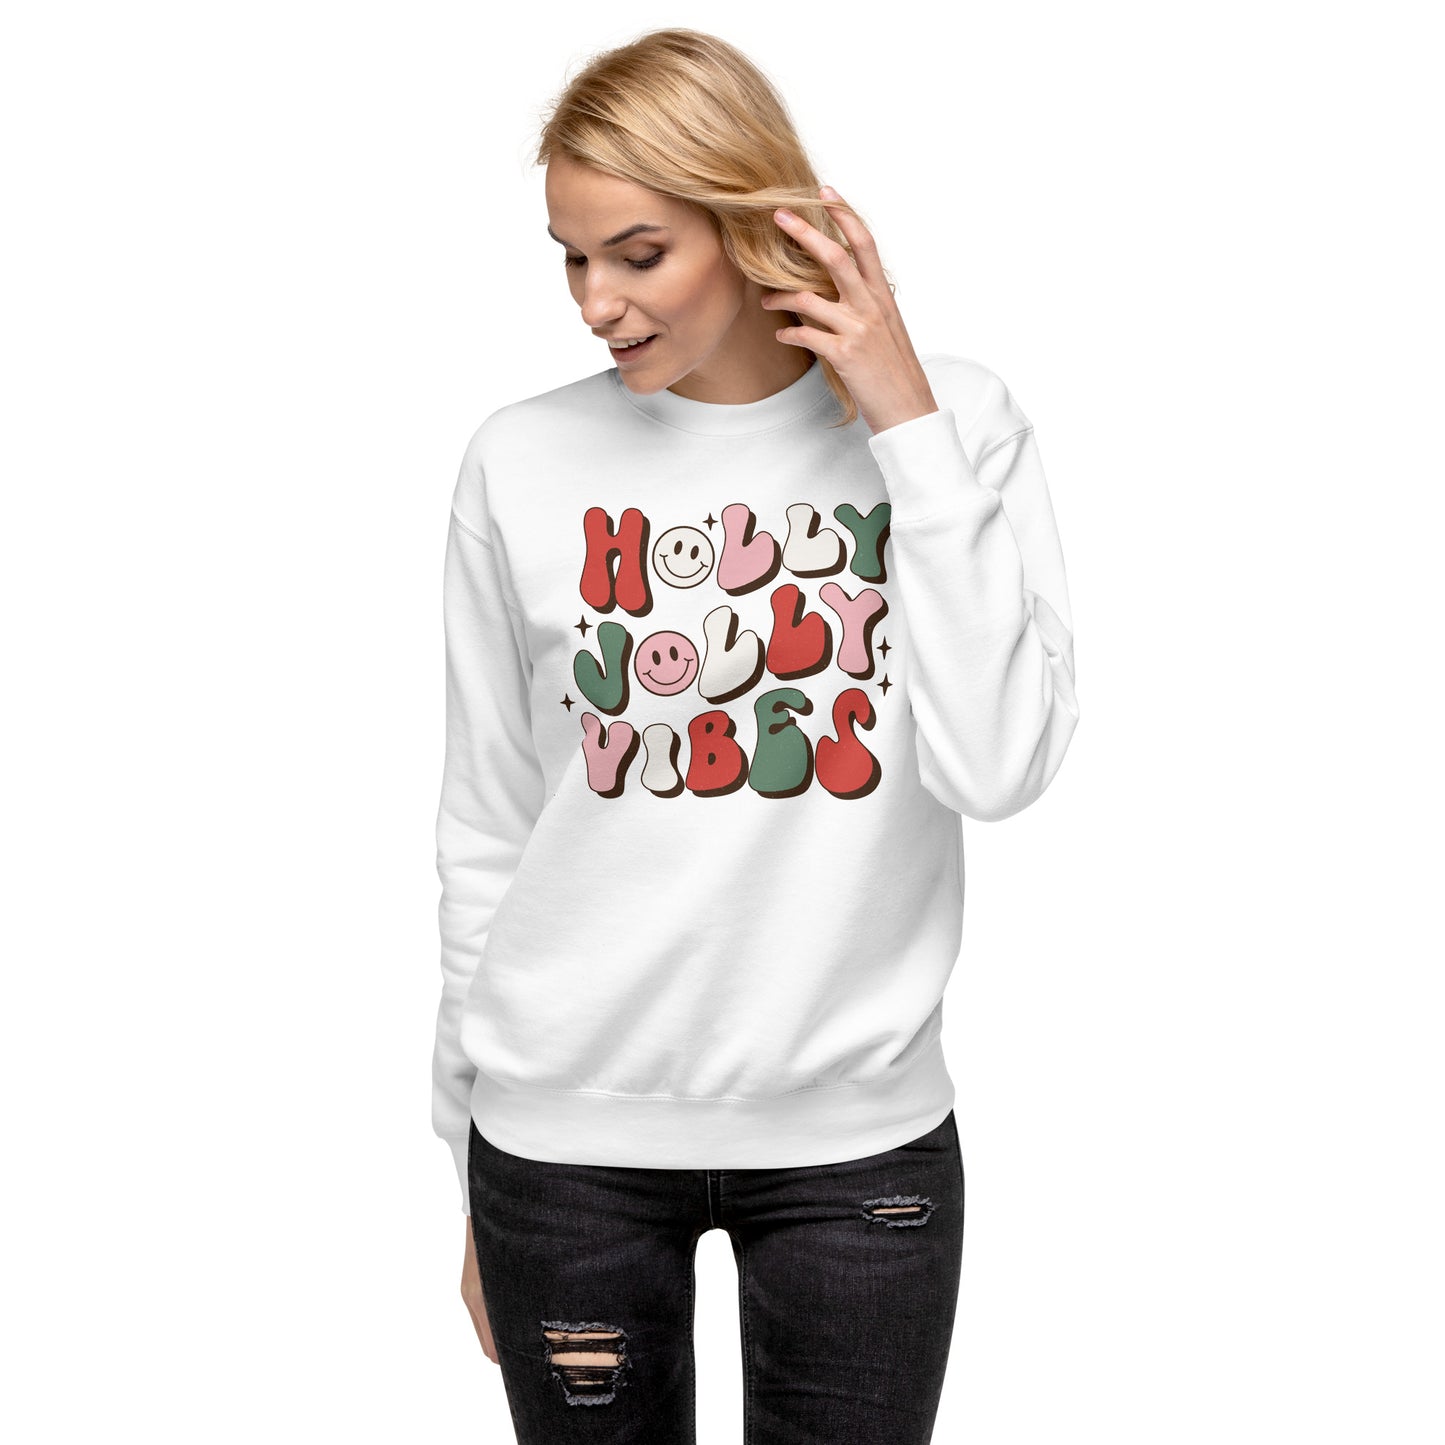 Holly Jolly Vibes Christmas Holiday Unisex Premium Sweatshirt